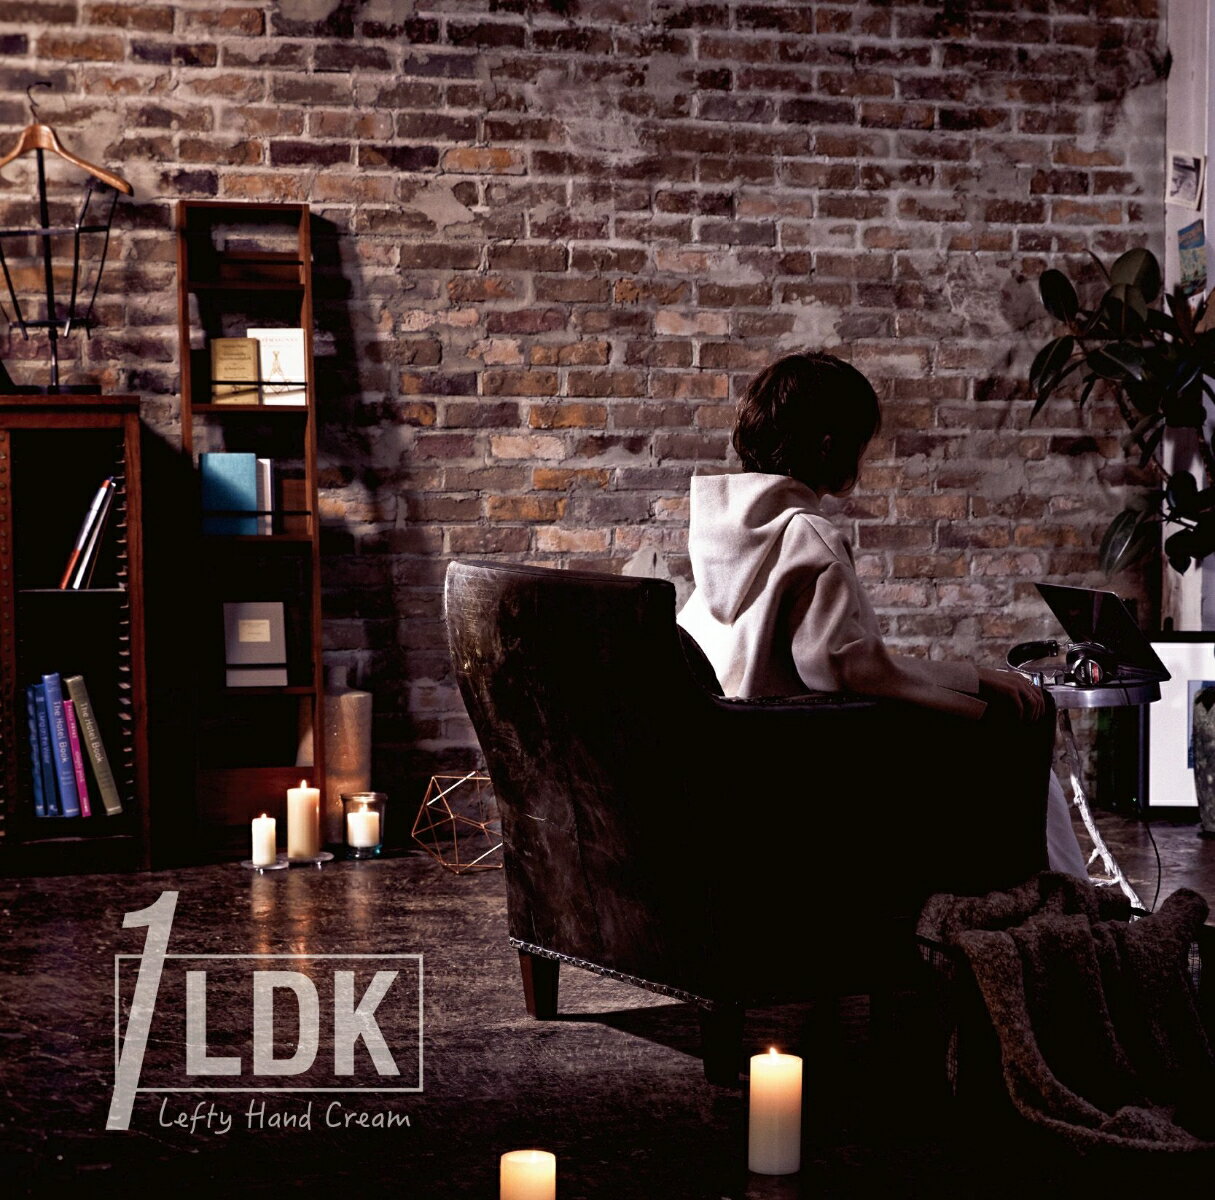 1LDK [ Lefty Hand Cream ]